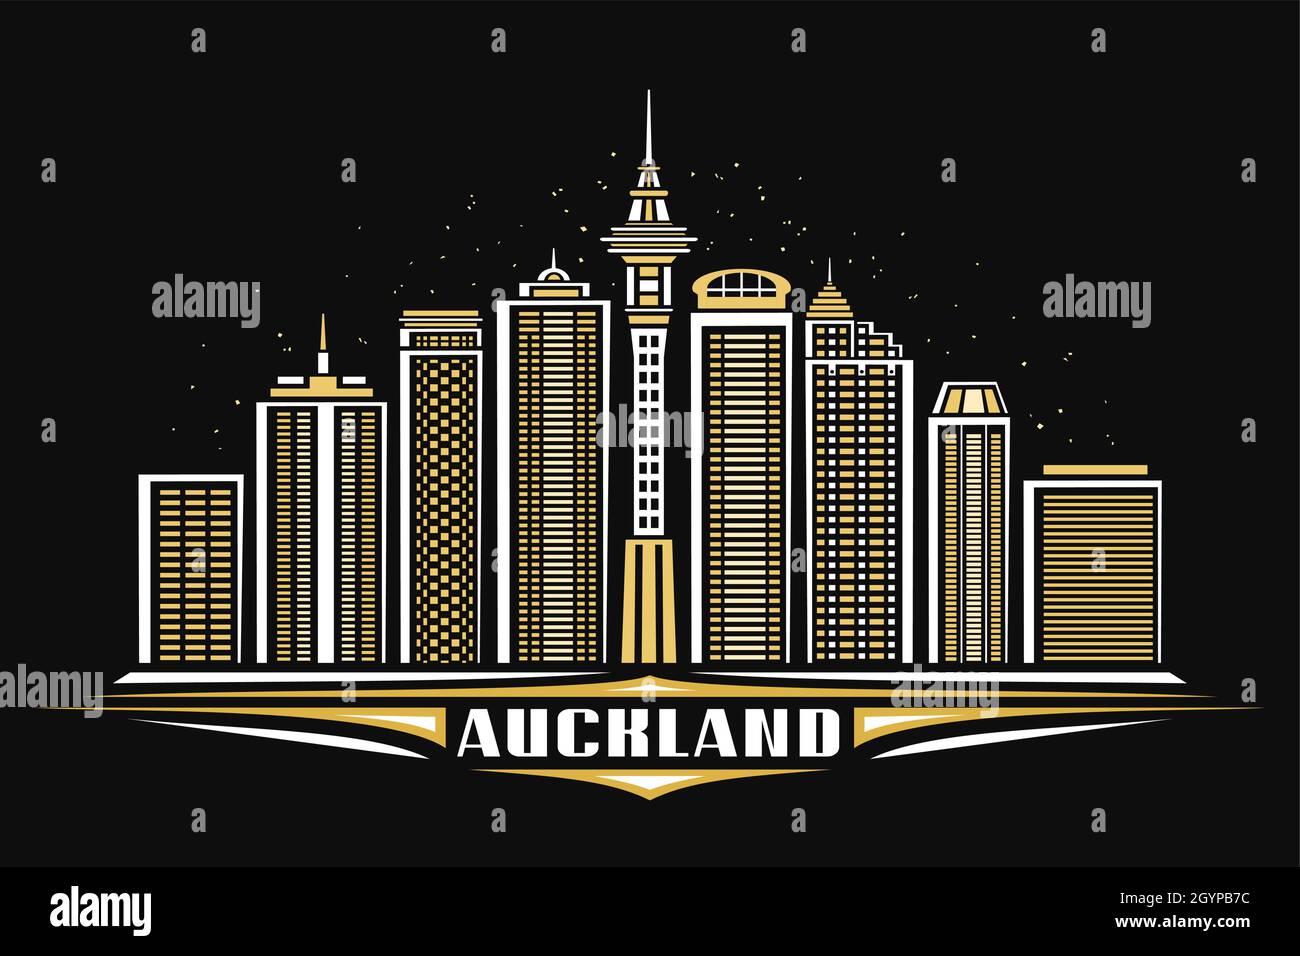 Vektor-Illustration von Auckland, schwarzes horizontales Poster mit linearem Design beleuchtete auckland Stadtlandschaft, Urban Line Art Konzept mit dekorativem le Stock Vektor